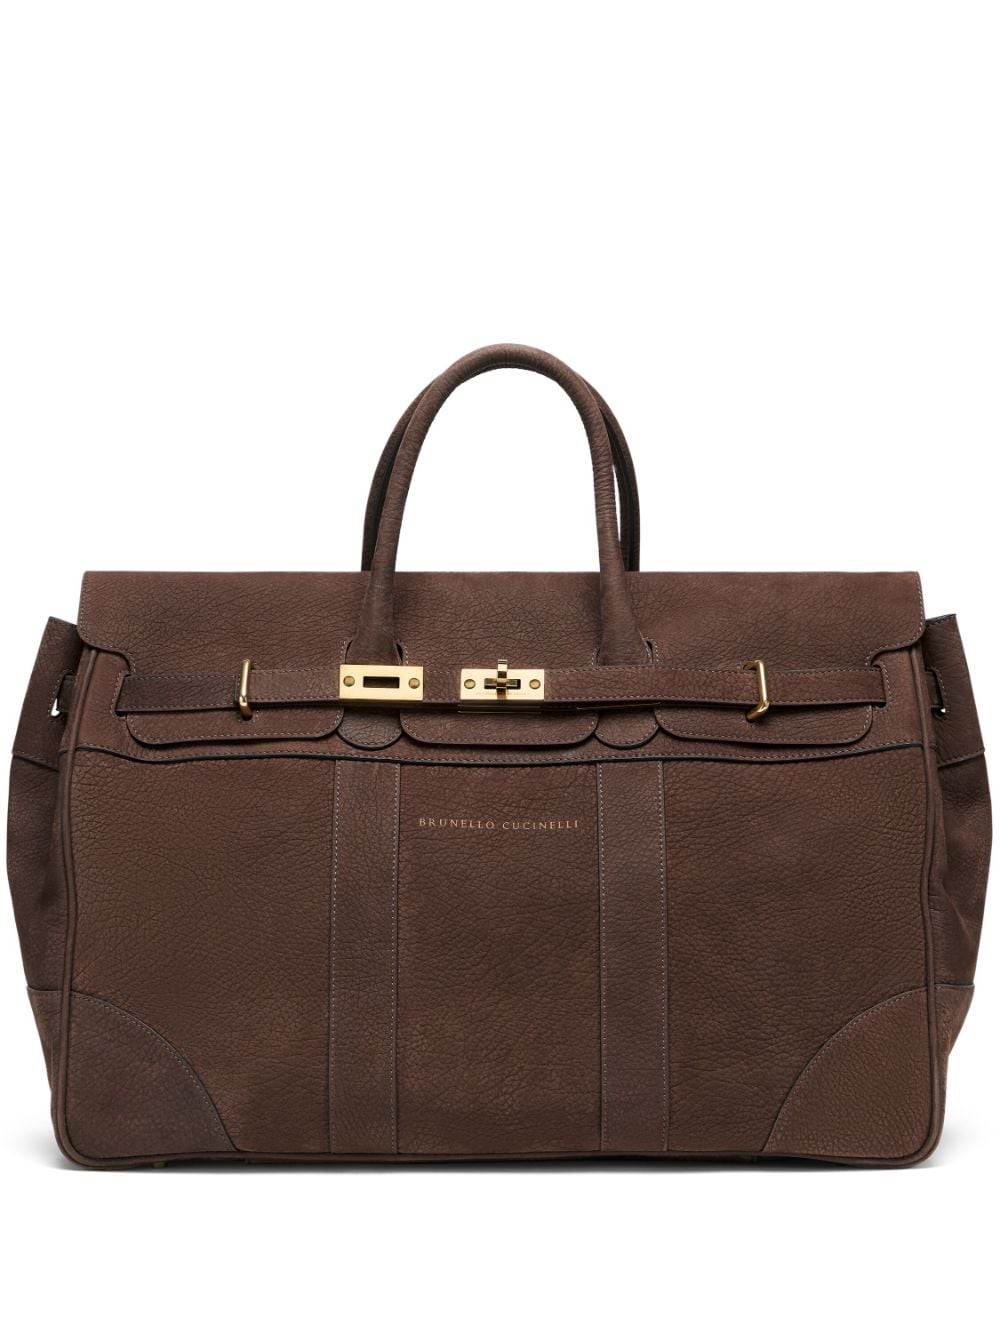 Brunello Cucinelli logo-print leather handbag - Marrone